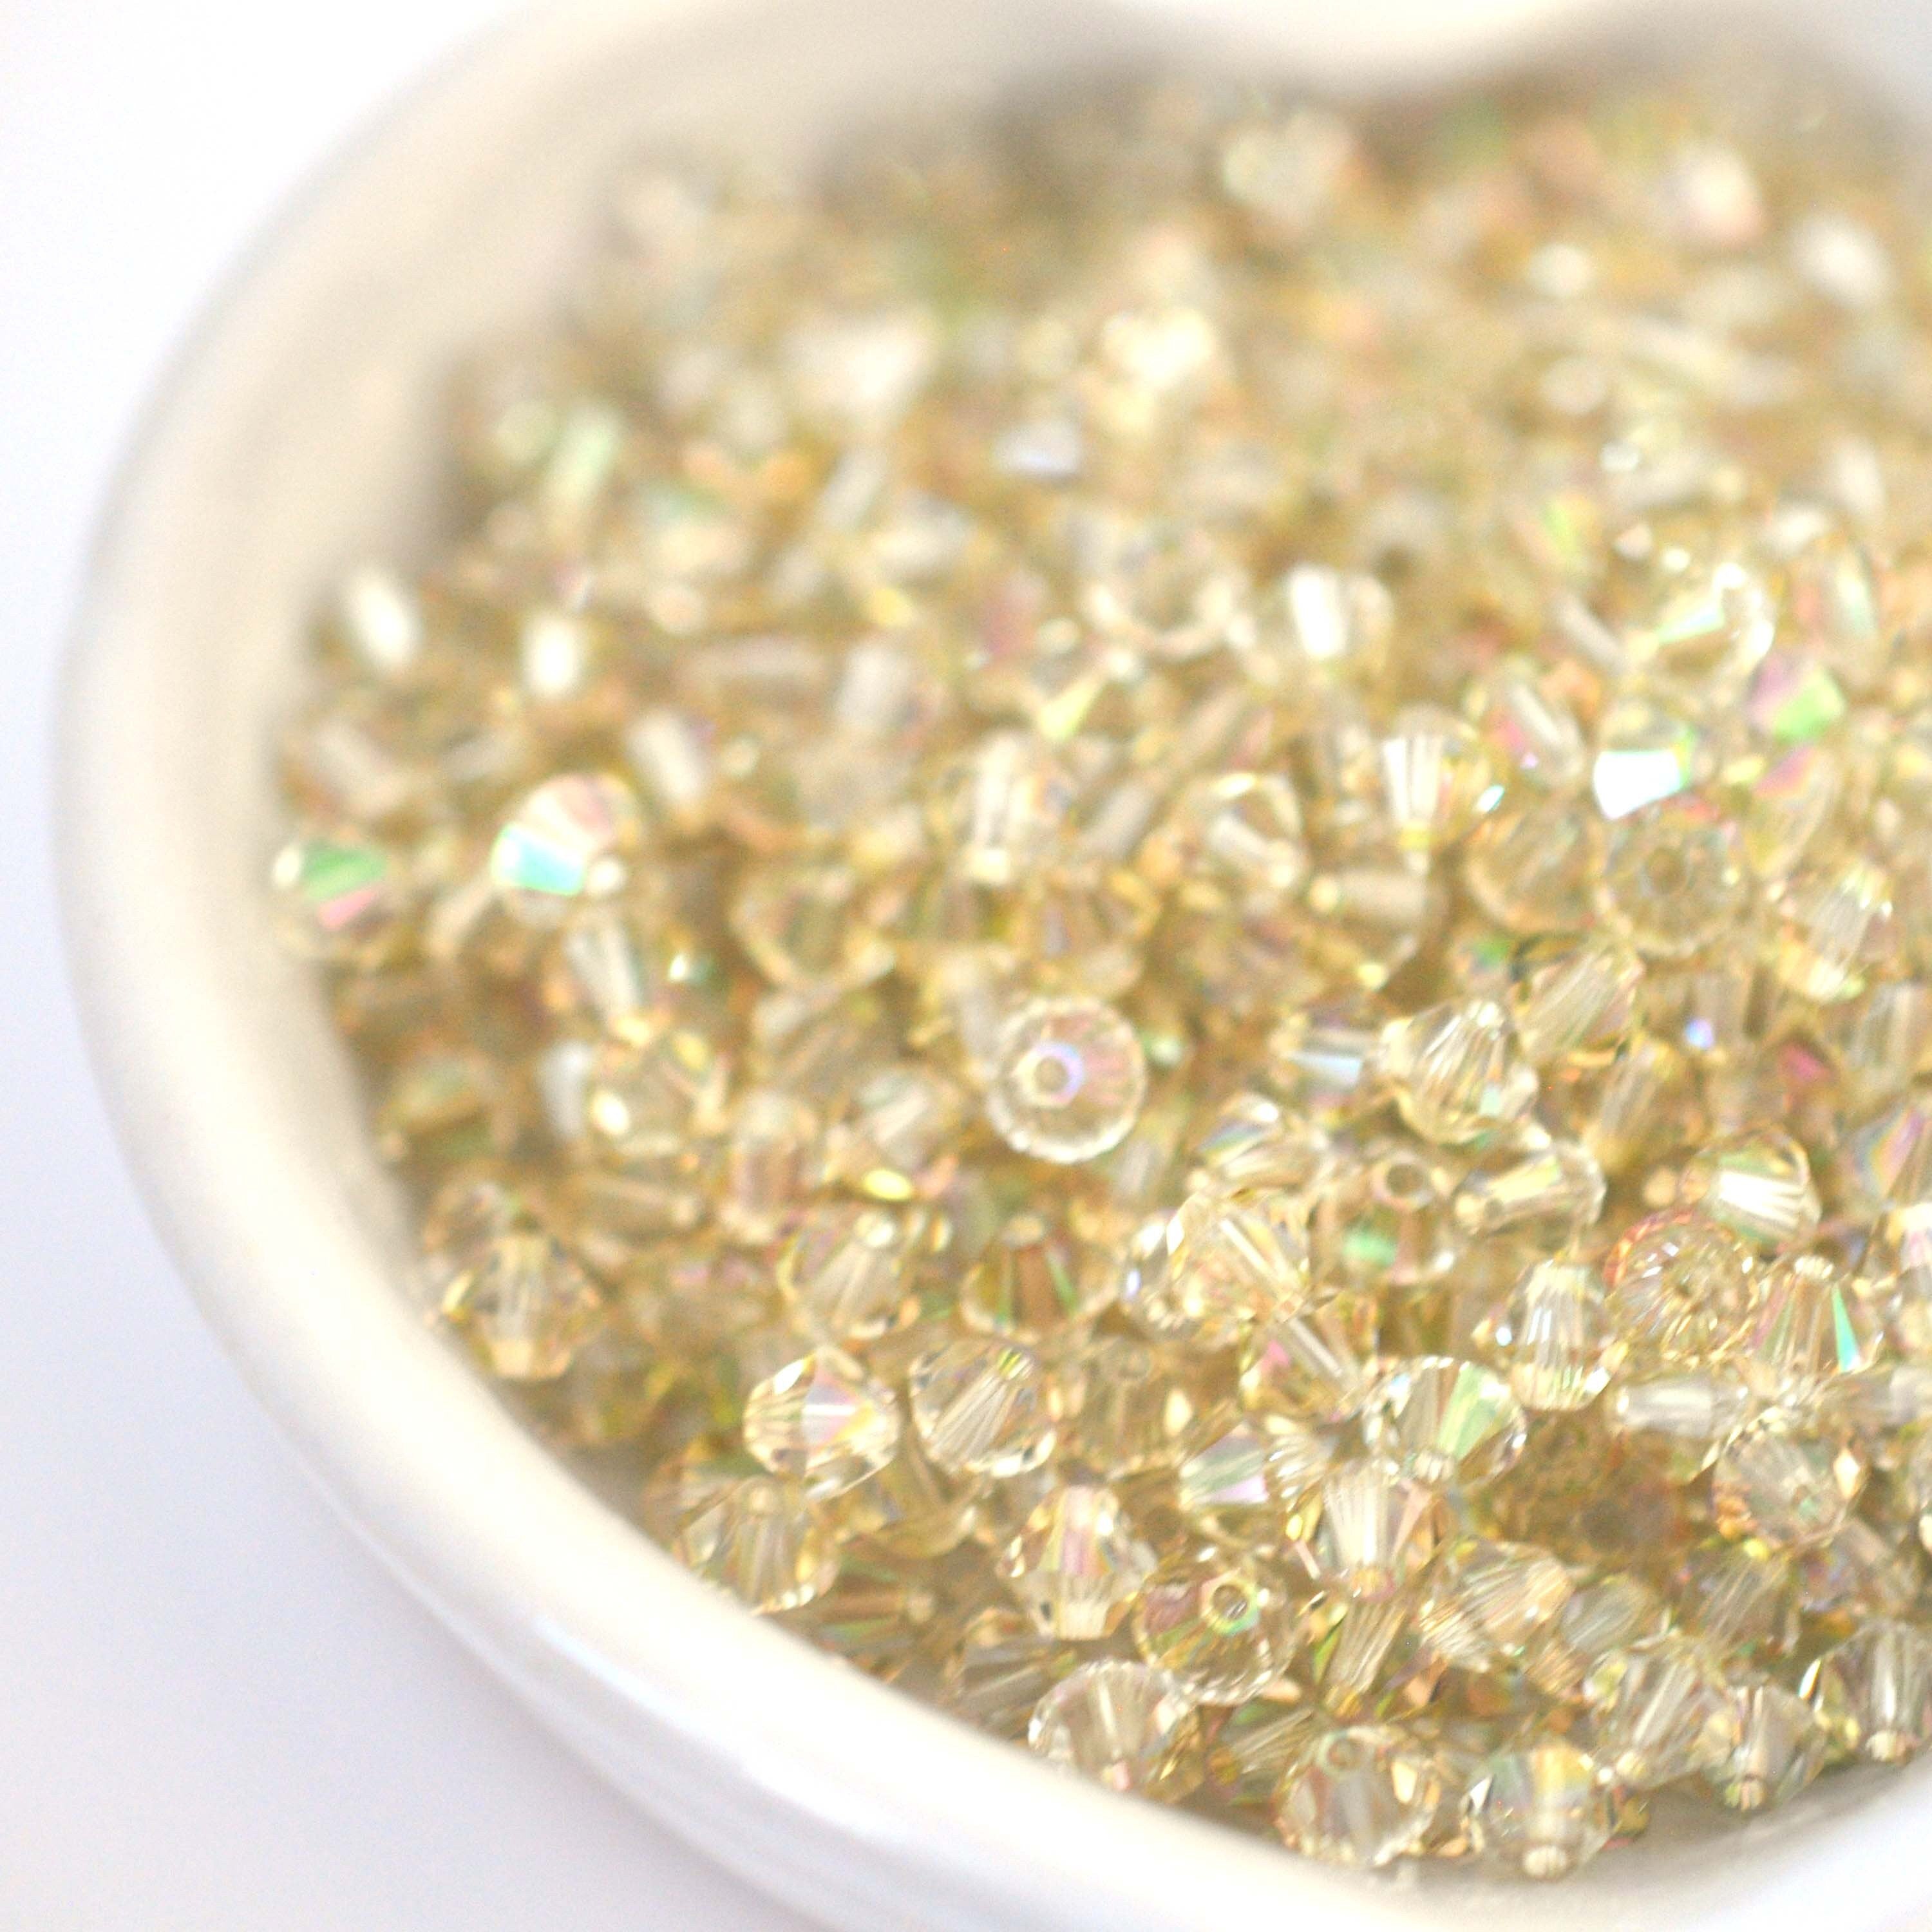 Luminous Green Bicone Beads 5328 Barton Crystal 4mm